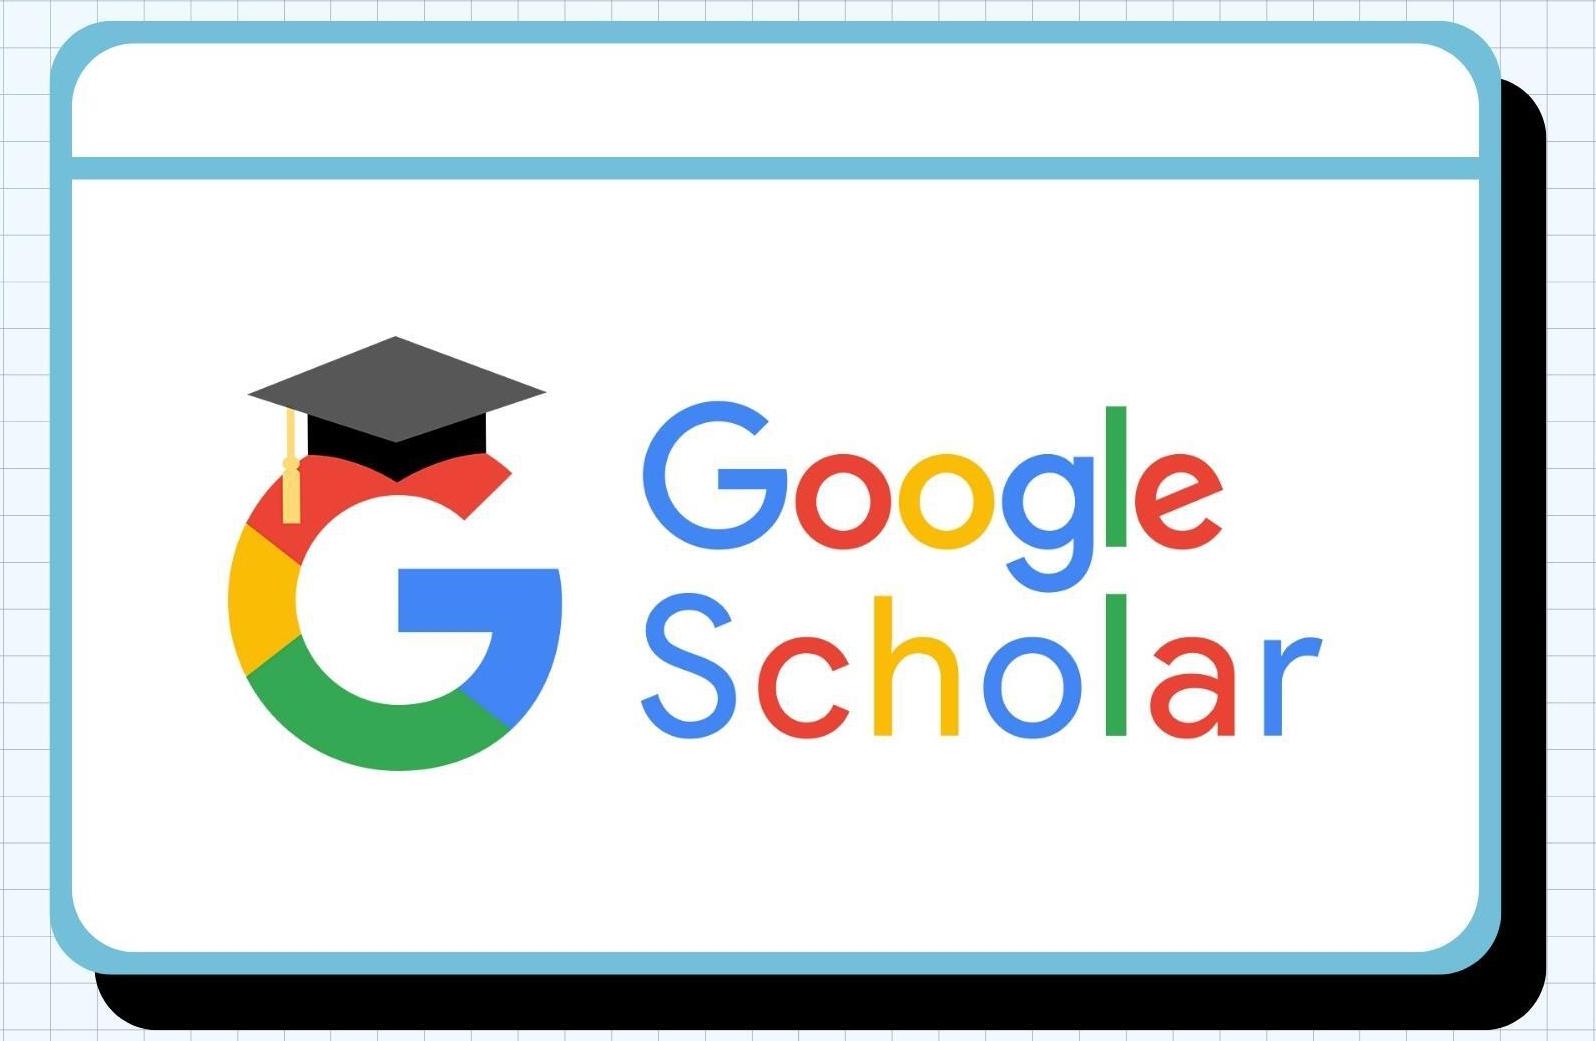 Search Persian article in Google Scholar